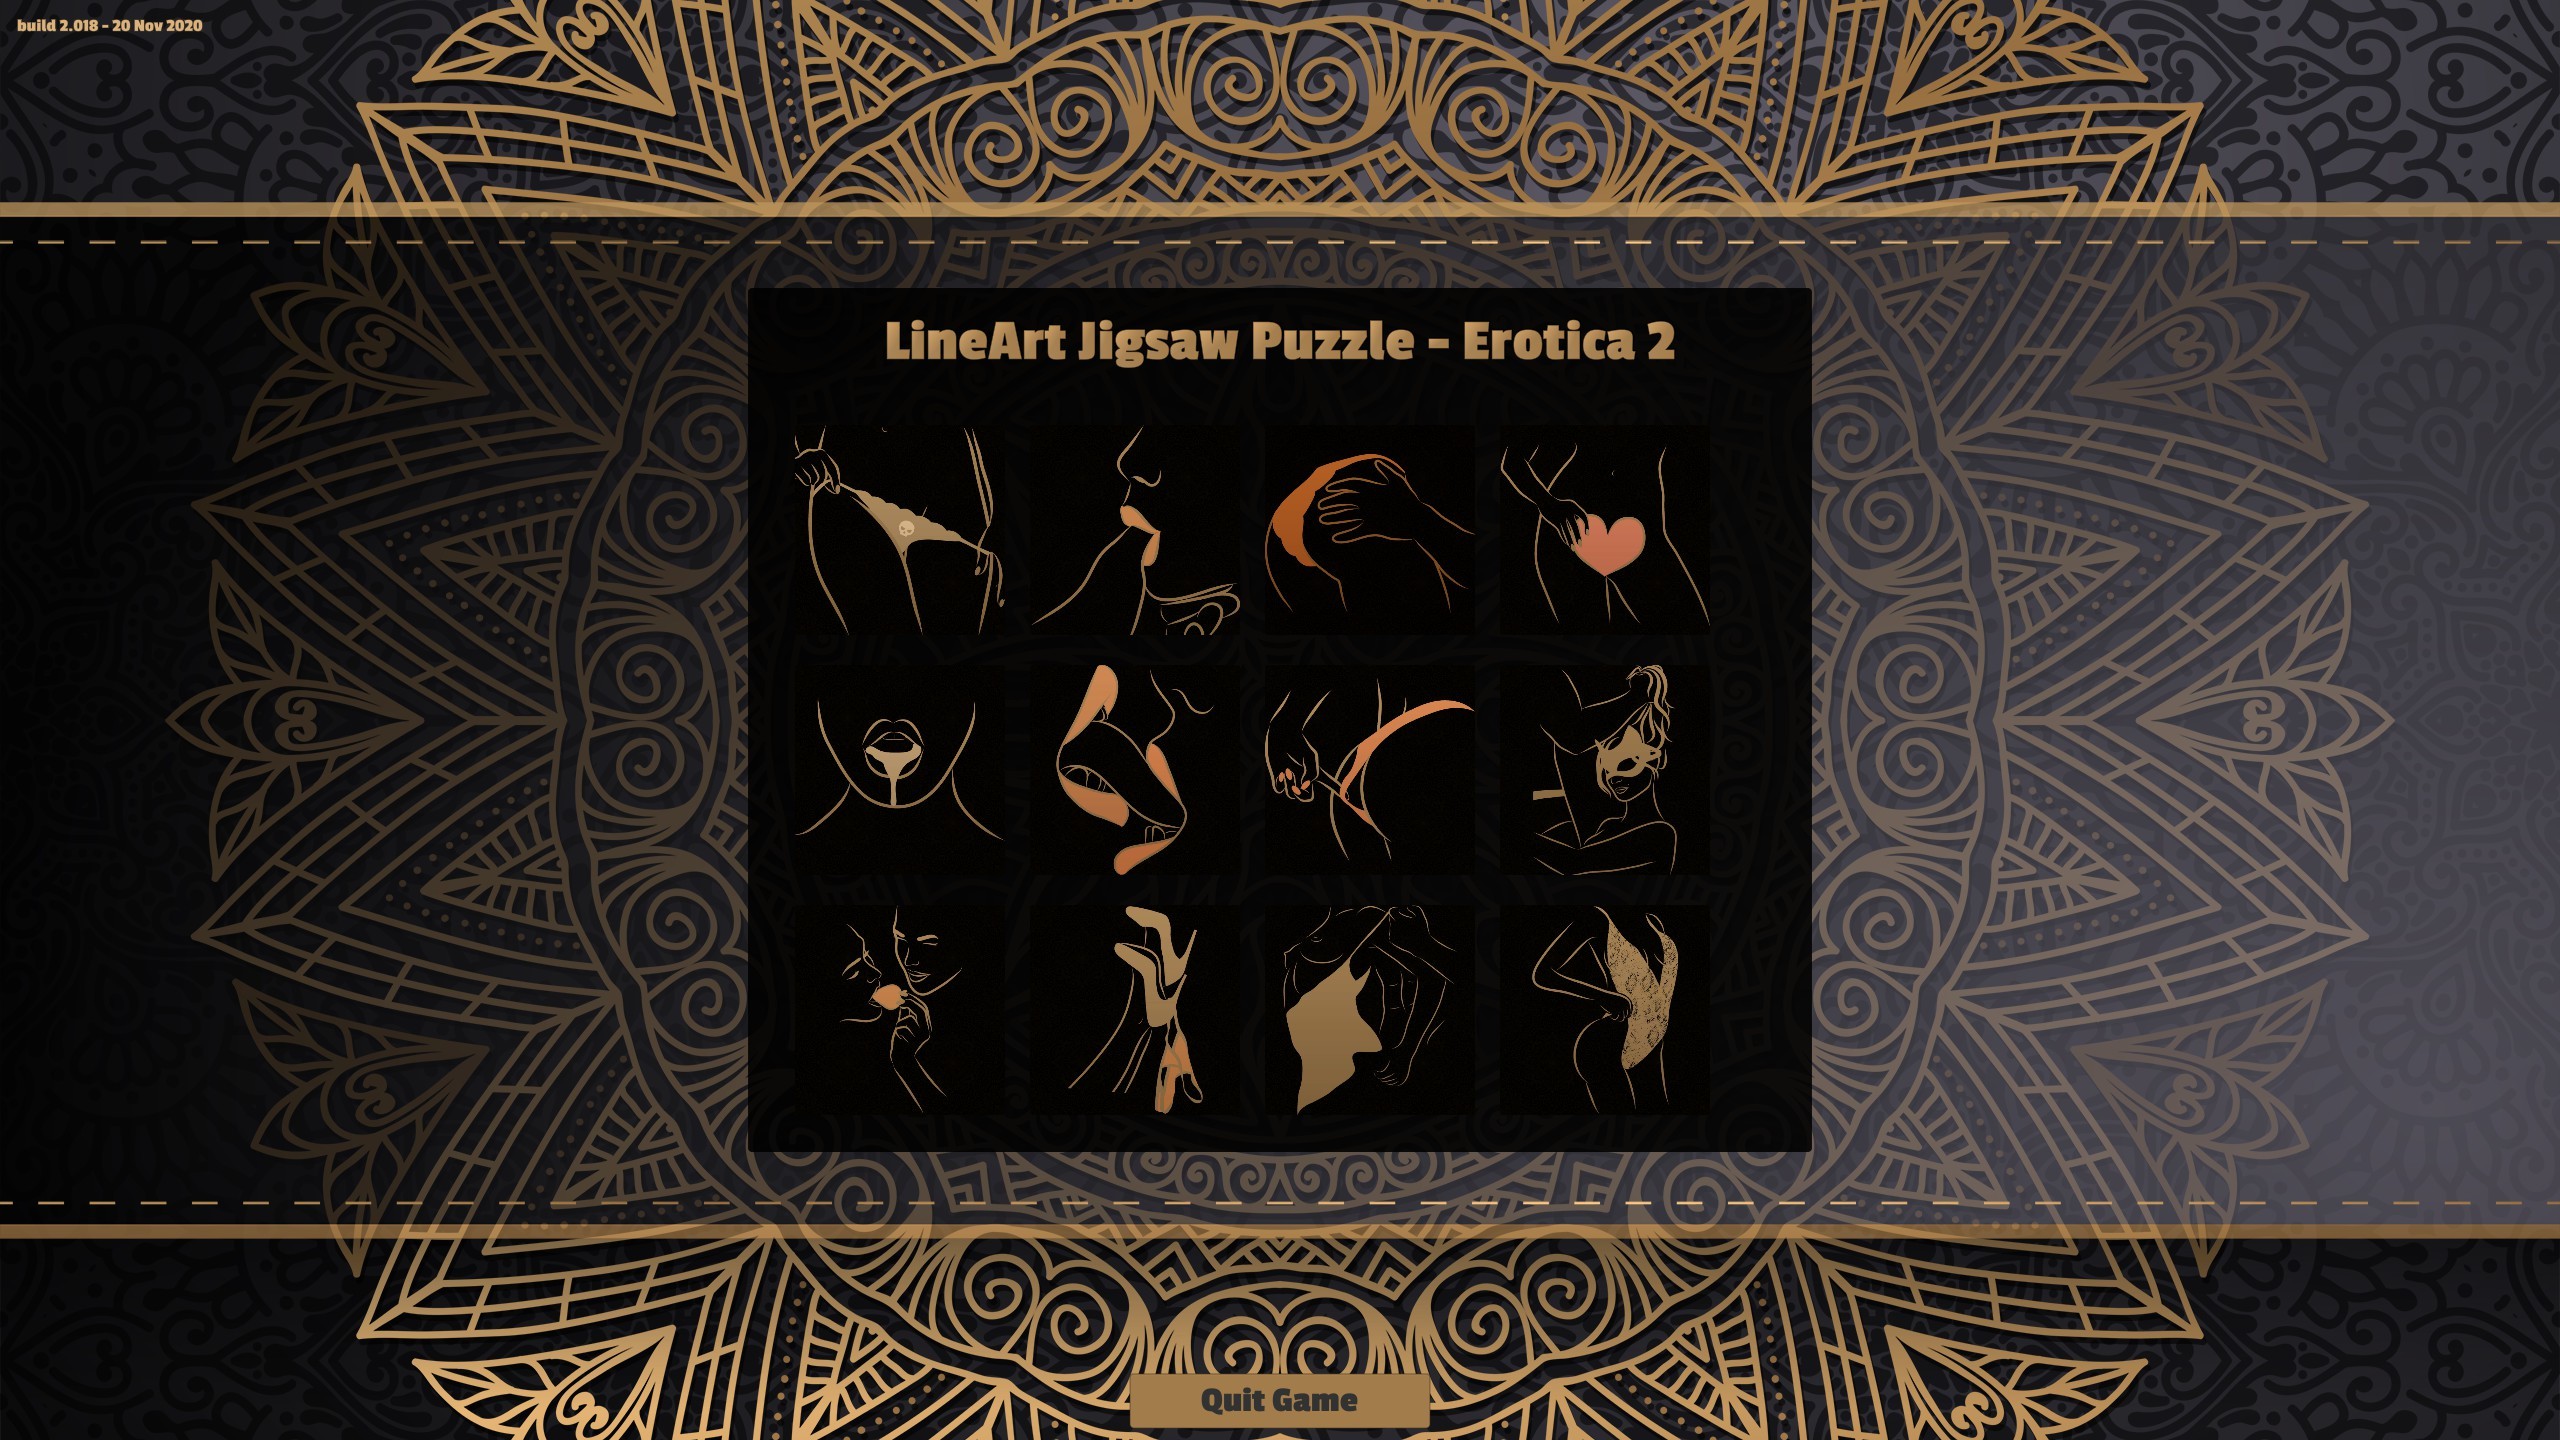 LineArt Jigsaw Puzzle - Erotica 2 Steam CD Key [USD 0.21]